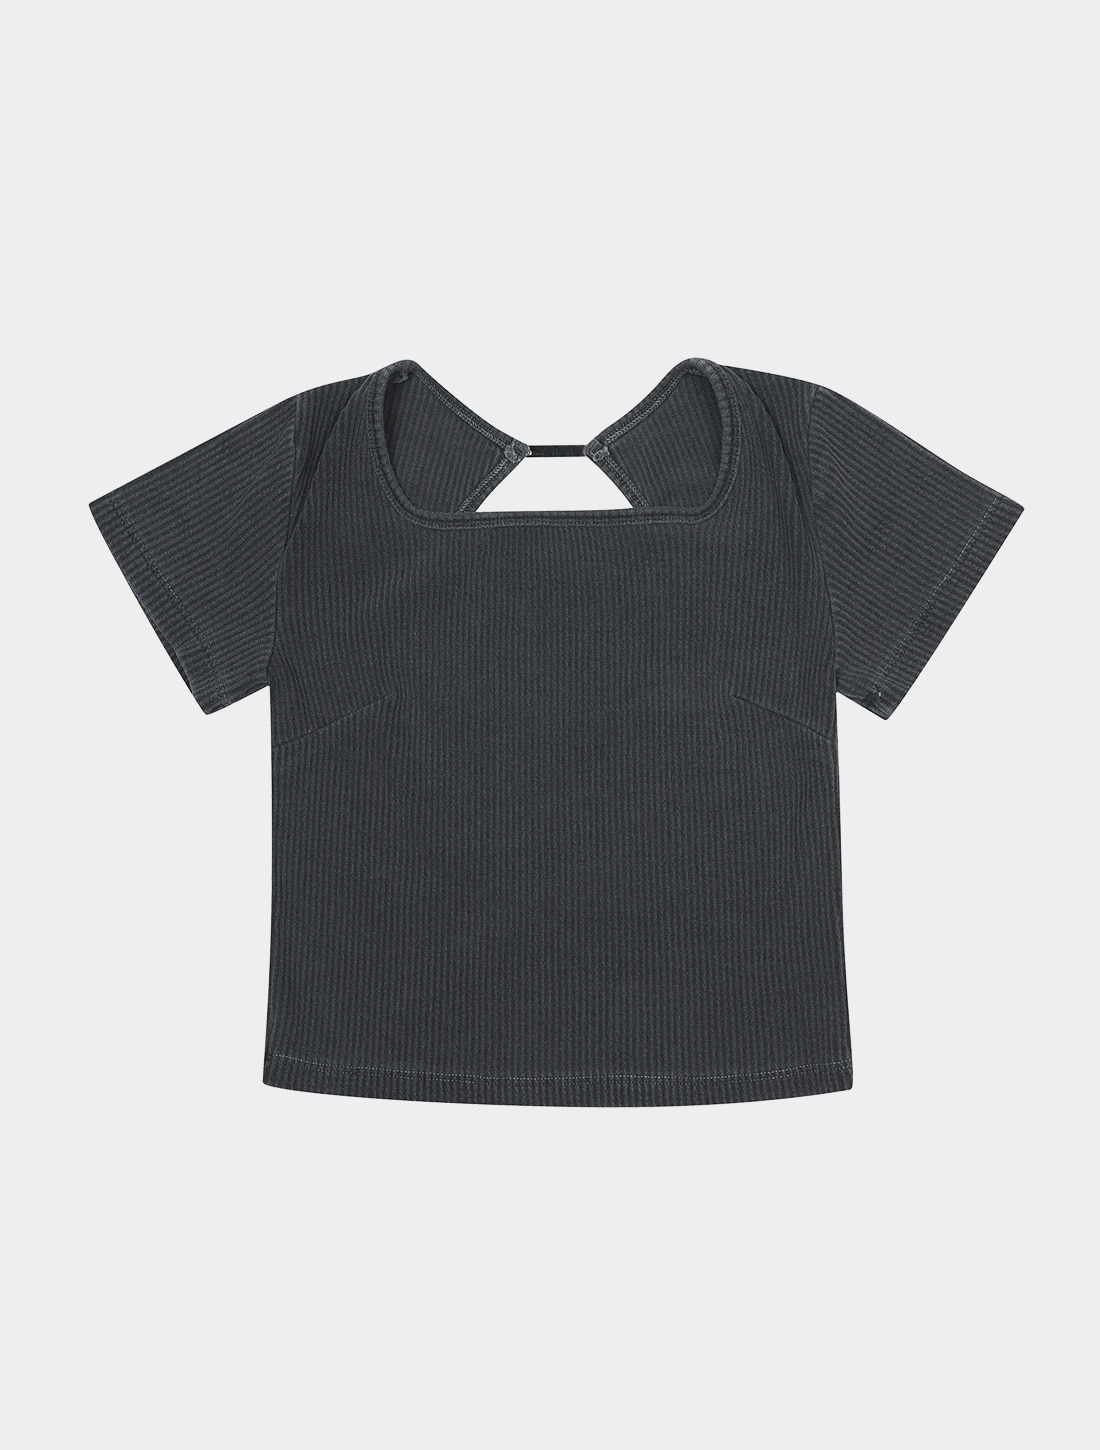 Washing kisying pendant cropped T-shirt (black)